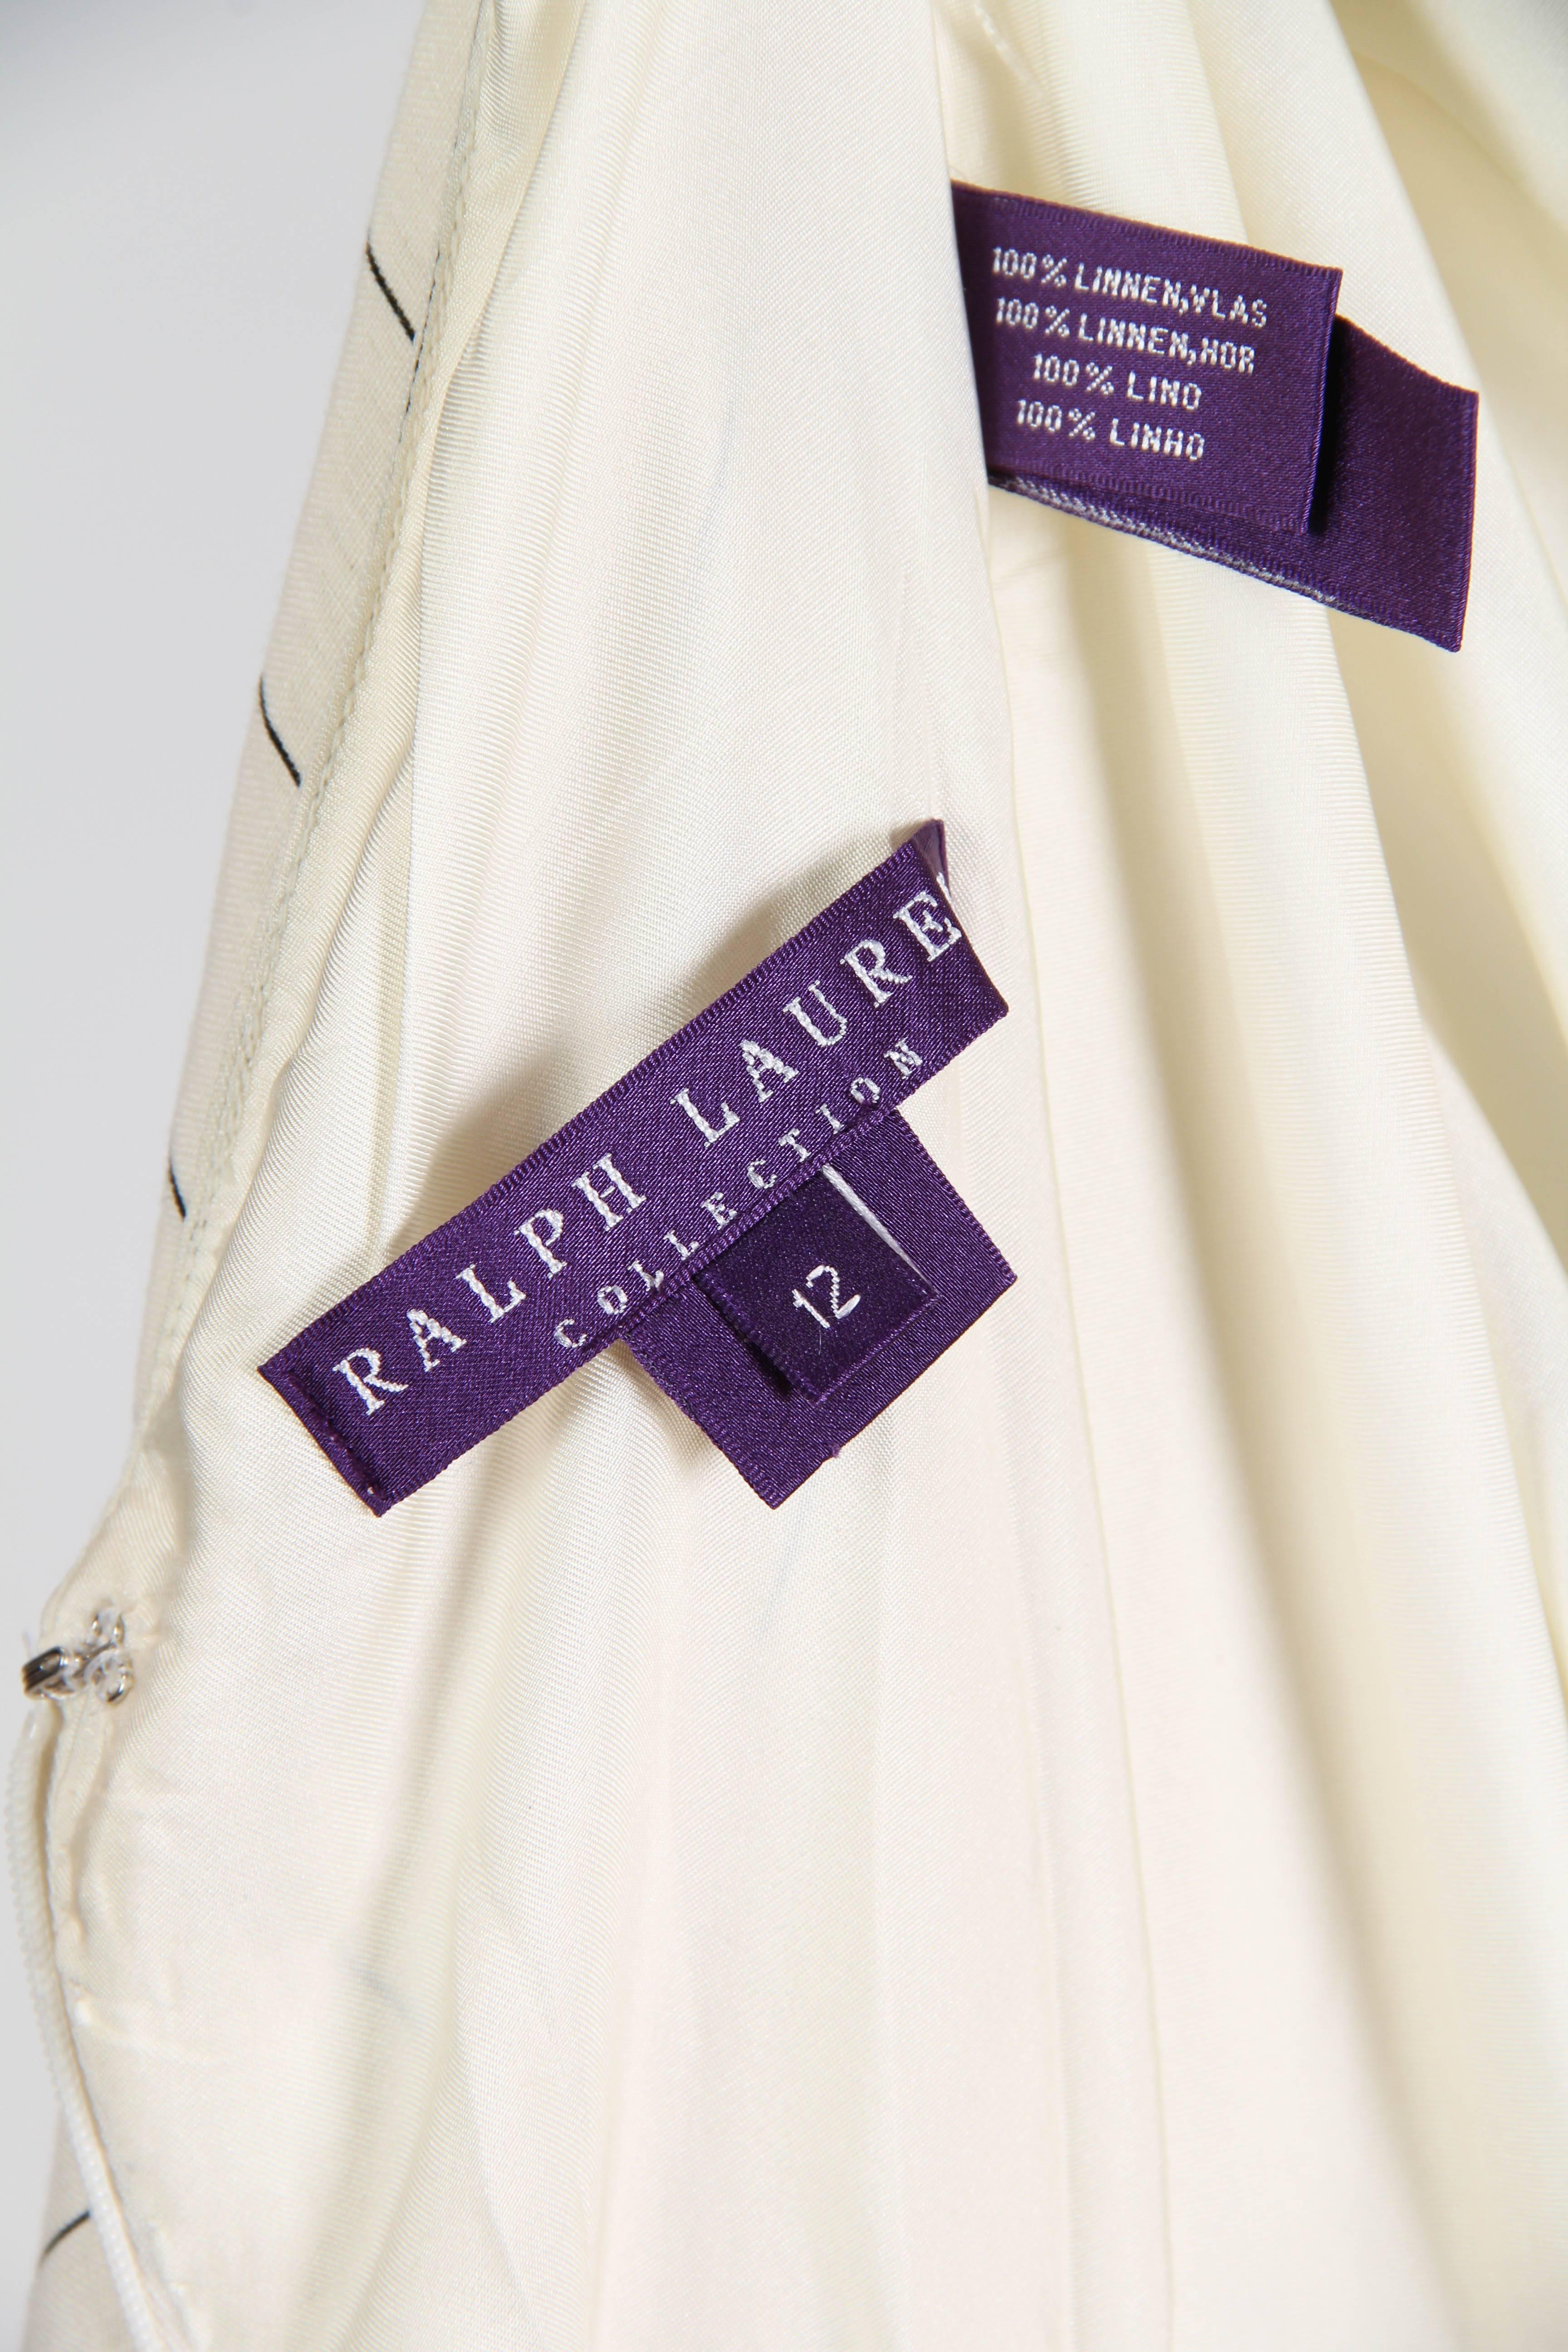 Ralph Lauren Purple Label 1930s Style Bias Cut Linen Dress 3